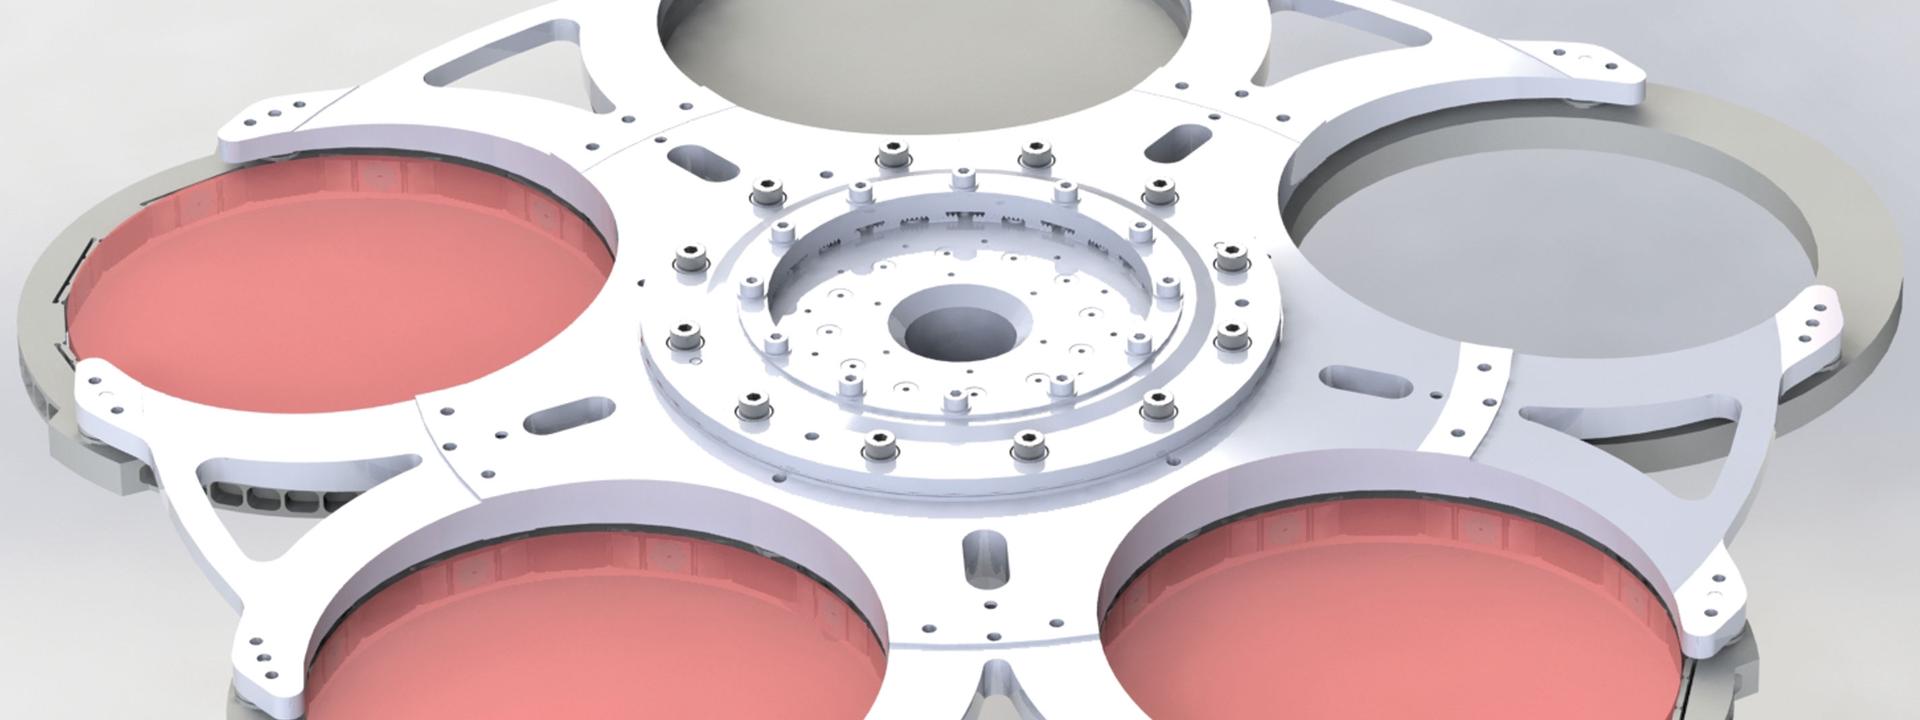 Euclid's filter Wheel Render